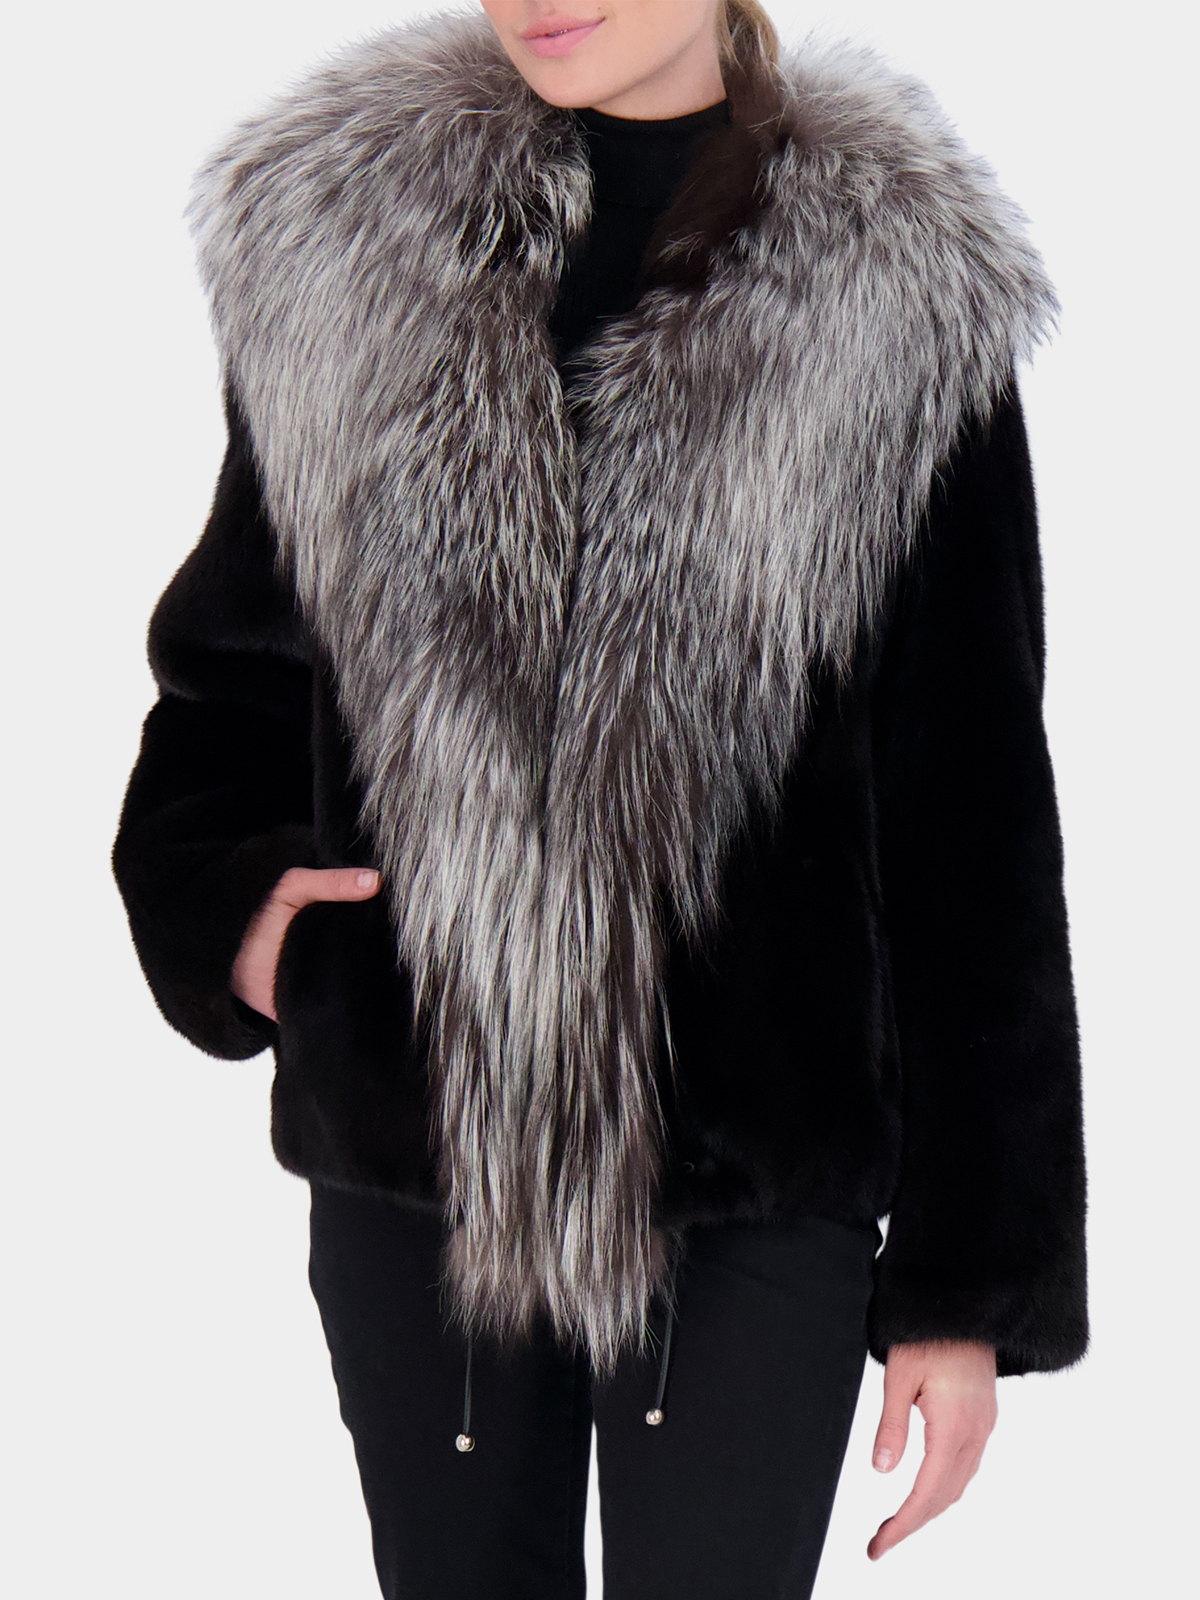 Day Furs, Inc. Man's Black Mink Fur Jacket